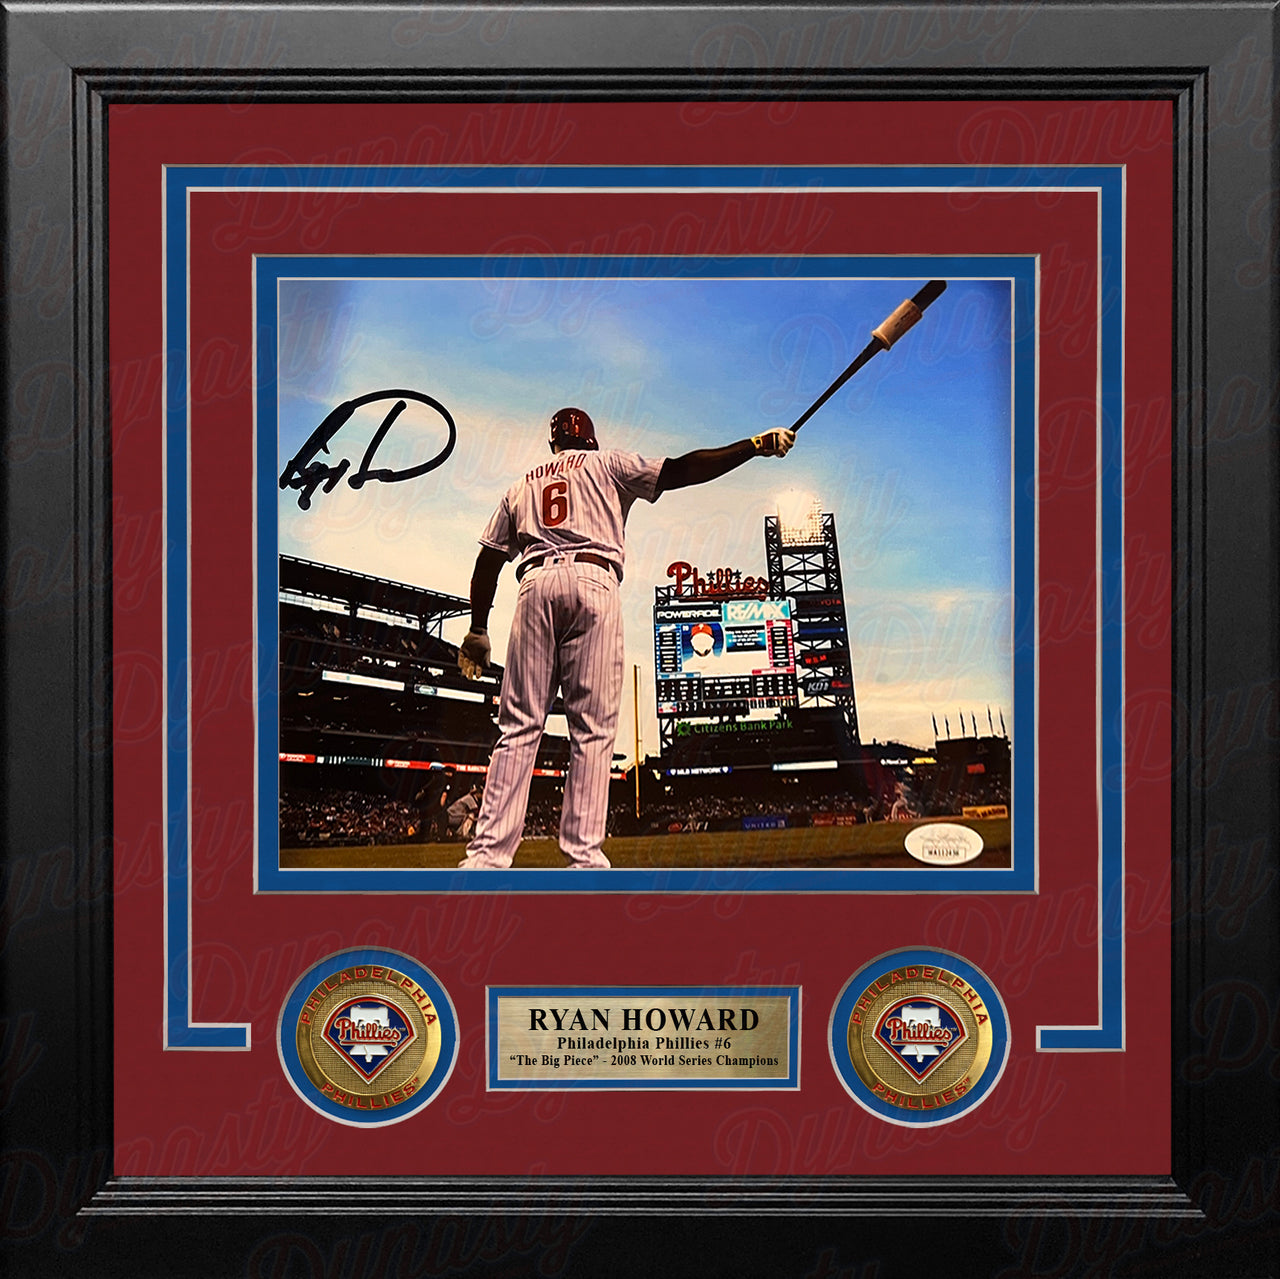 Ryan Howard On Deck Philadelphia Phillies Autographed Framed Baseball Photo - Dynasty Sports & Framing 